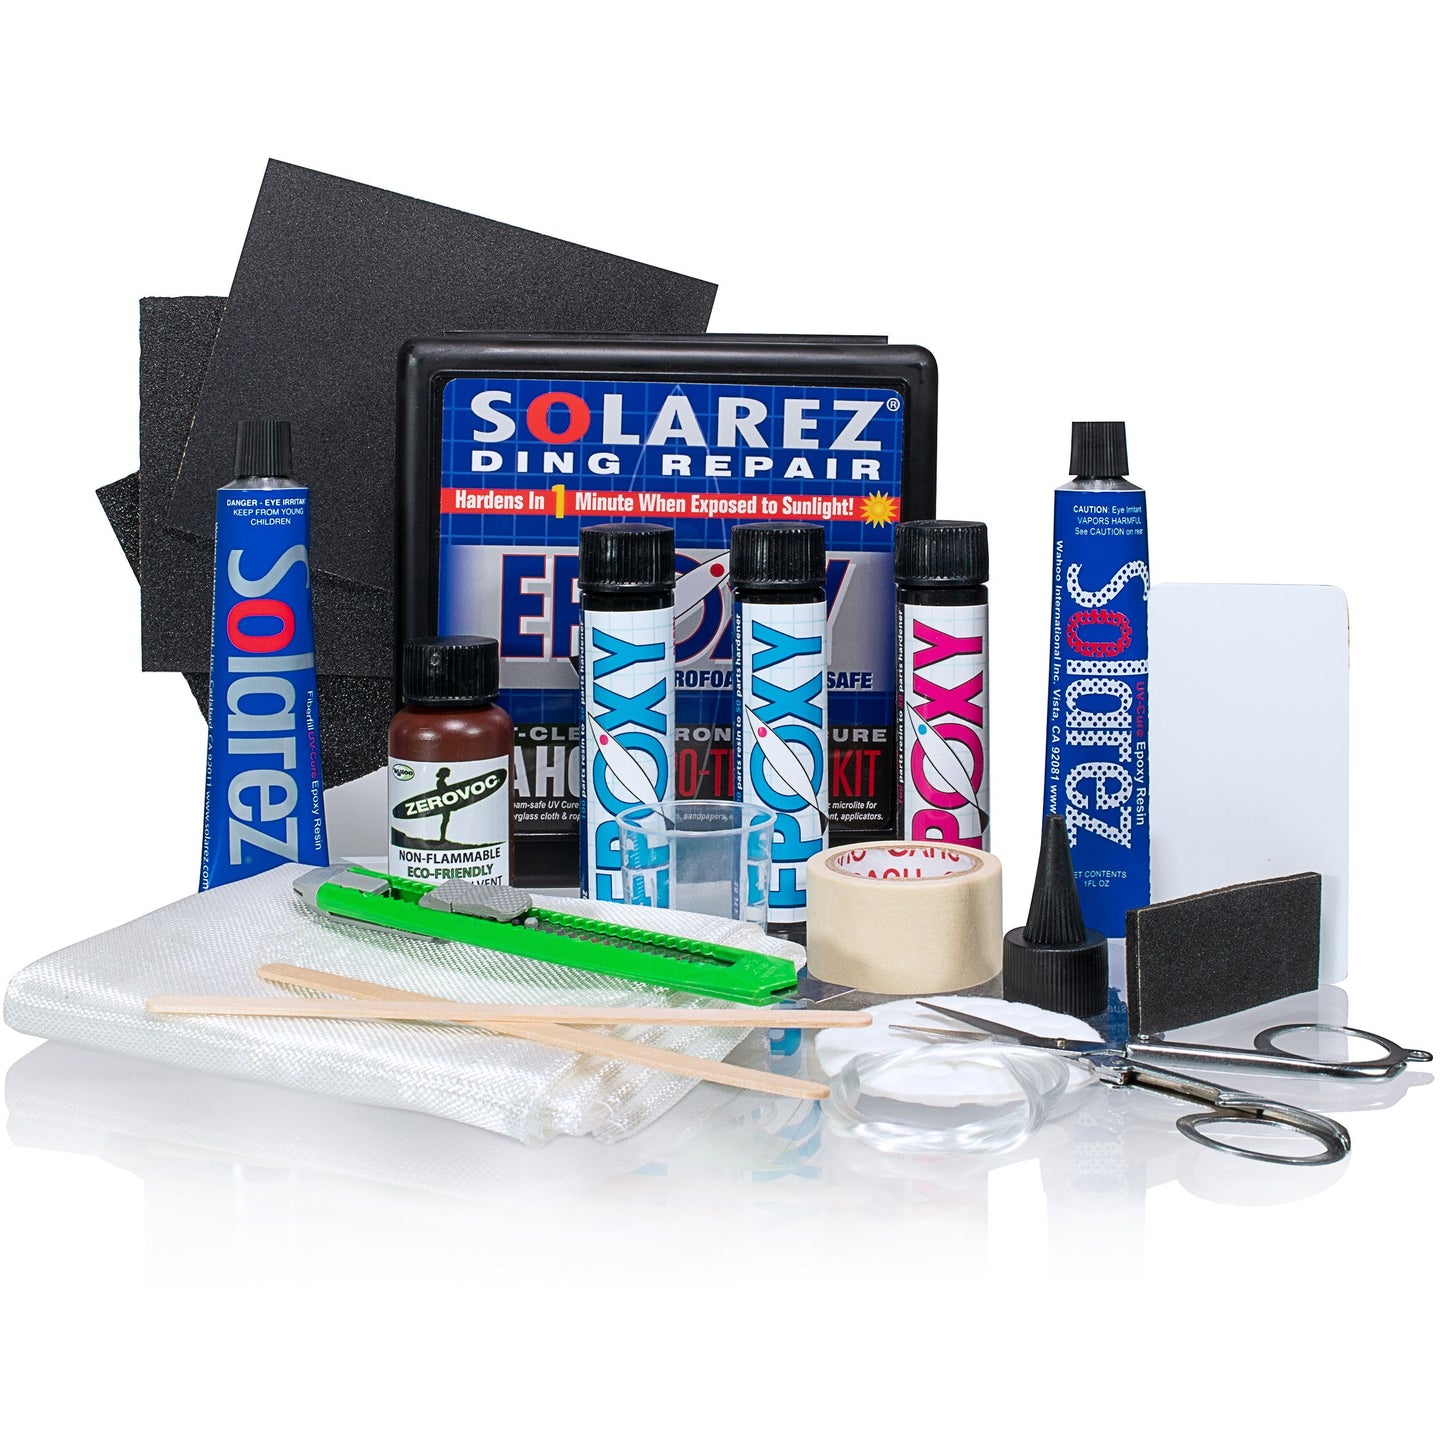 Solarez Epoxy Pro Travel Repair Kit